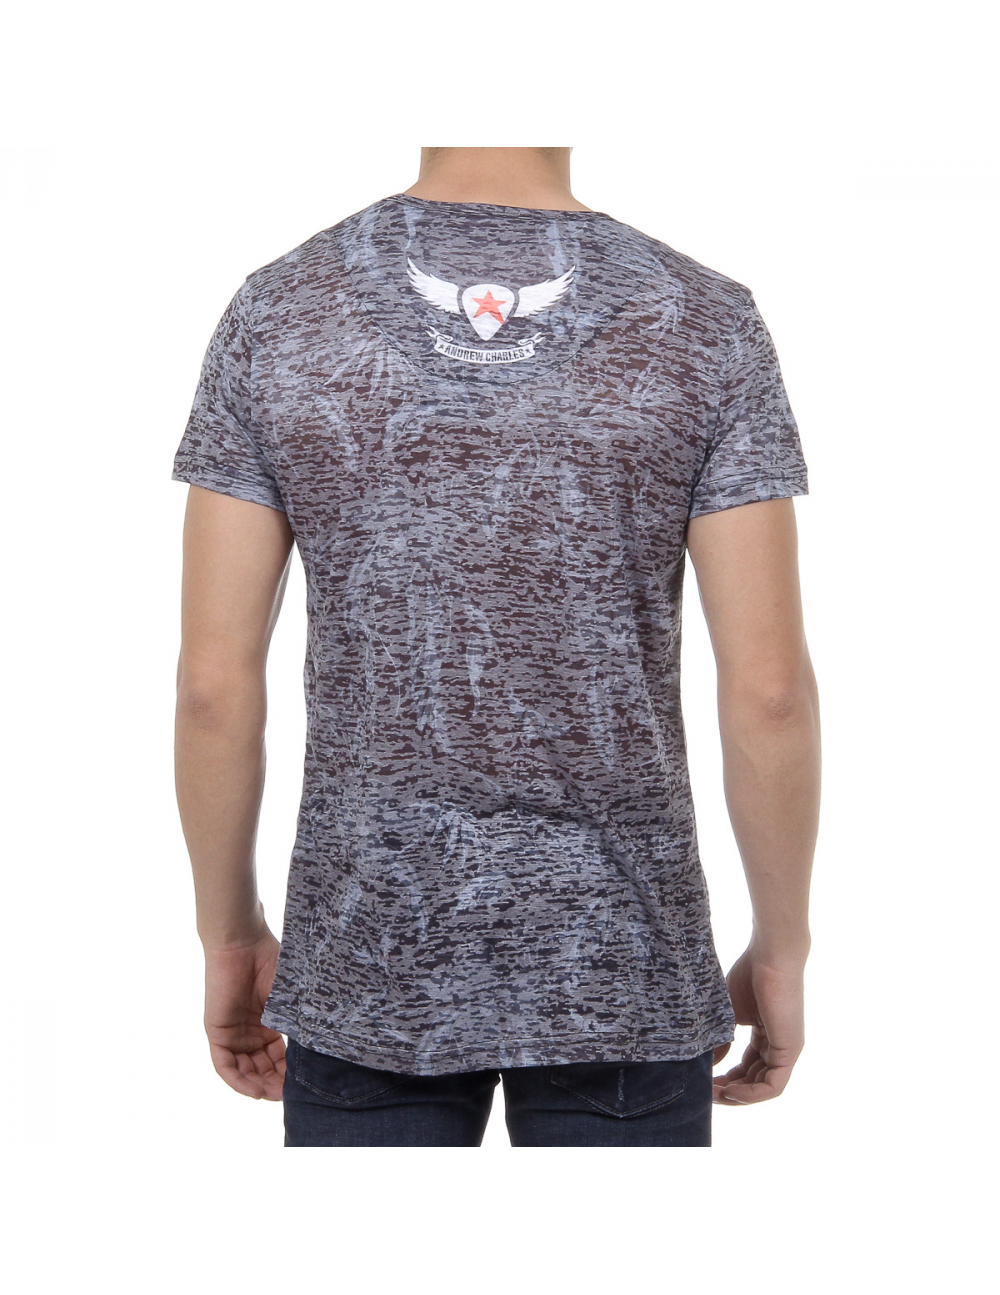 Andrew Charles Mens T-Shirt Short Sleeves V-Neck Black ISAAC - YuppyCollections